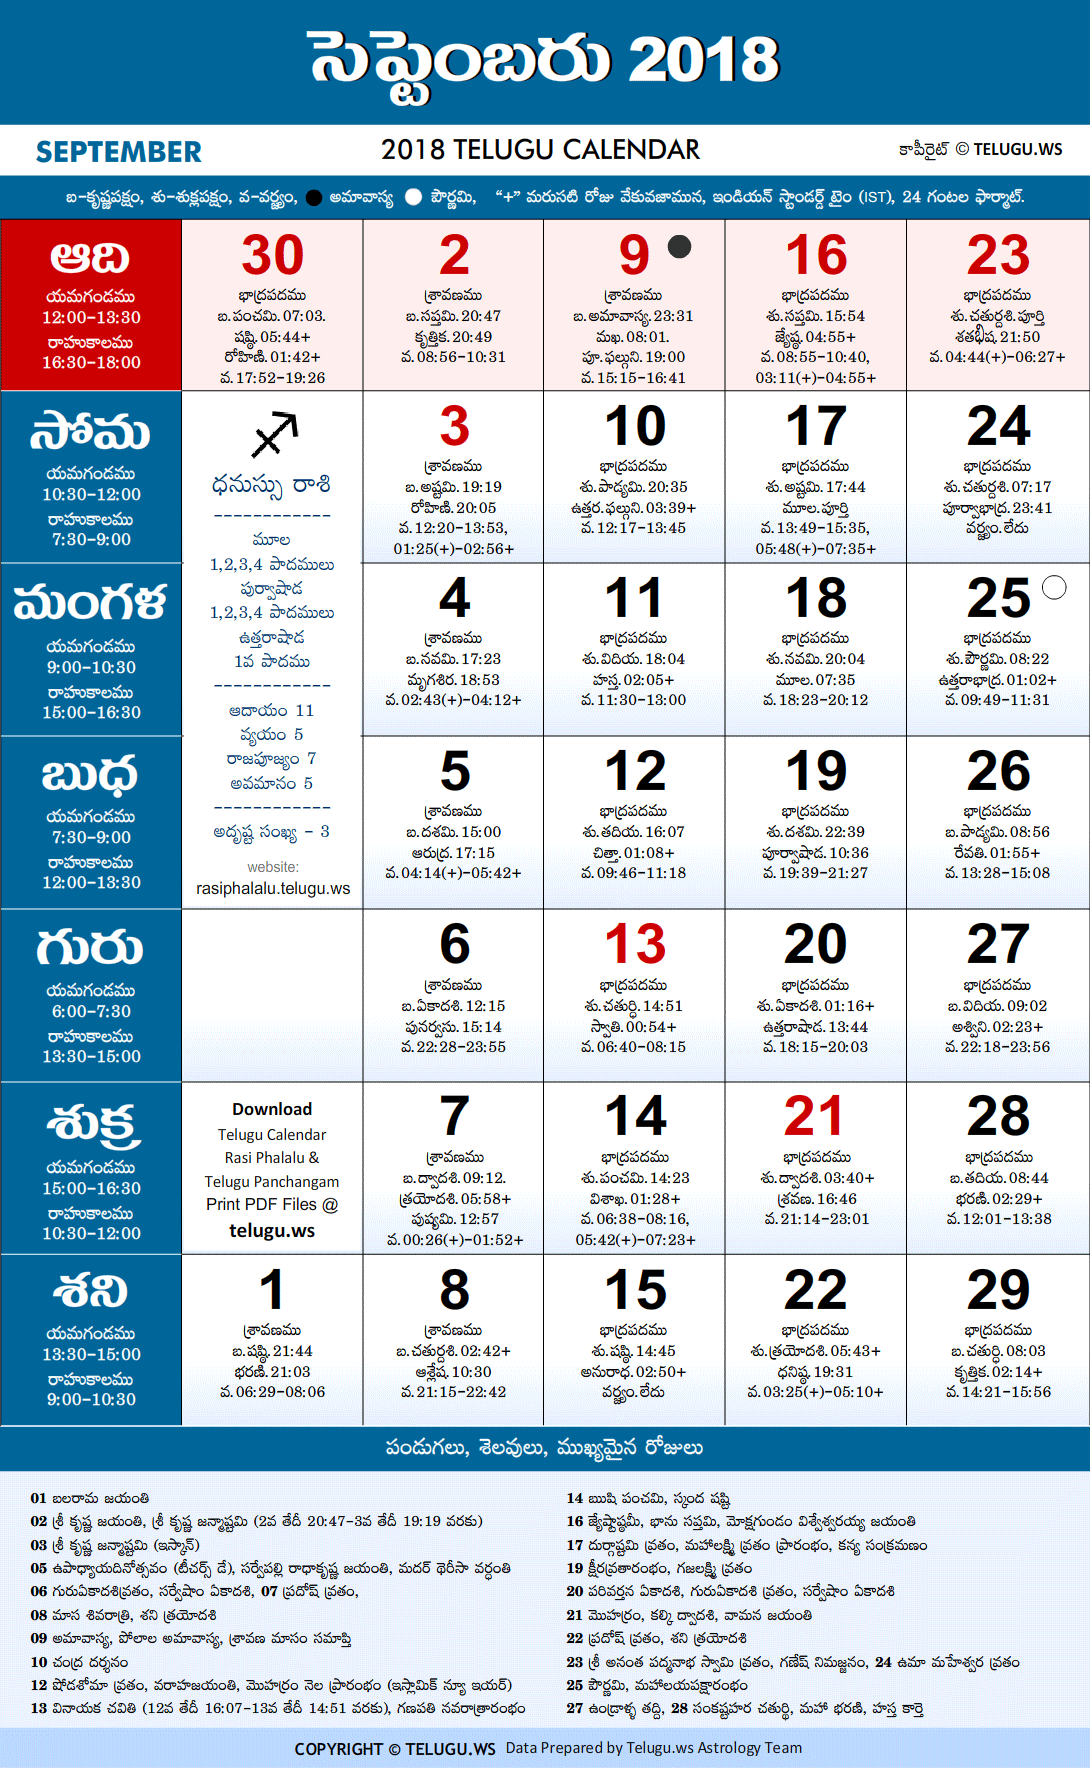 Telugu Calendar 2018 September Festivals and Holidays